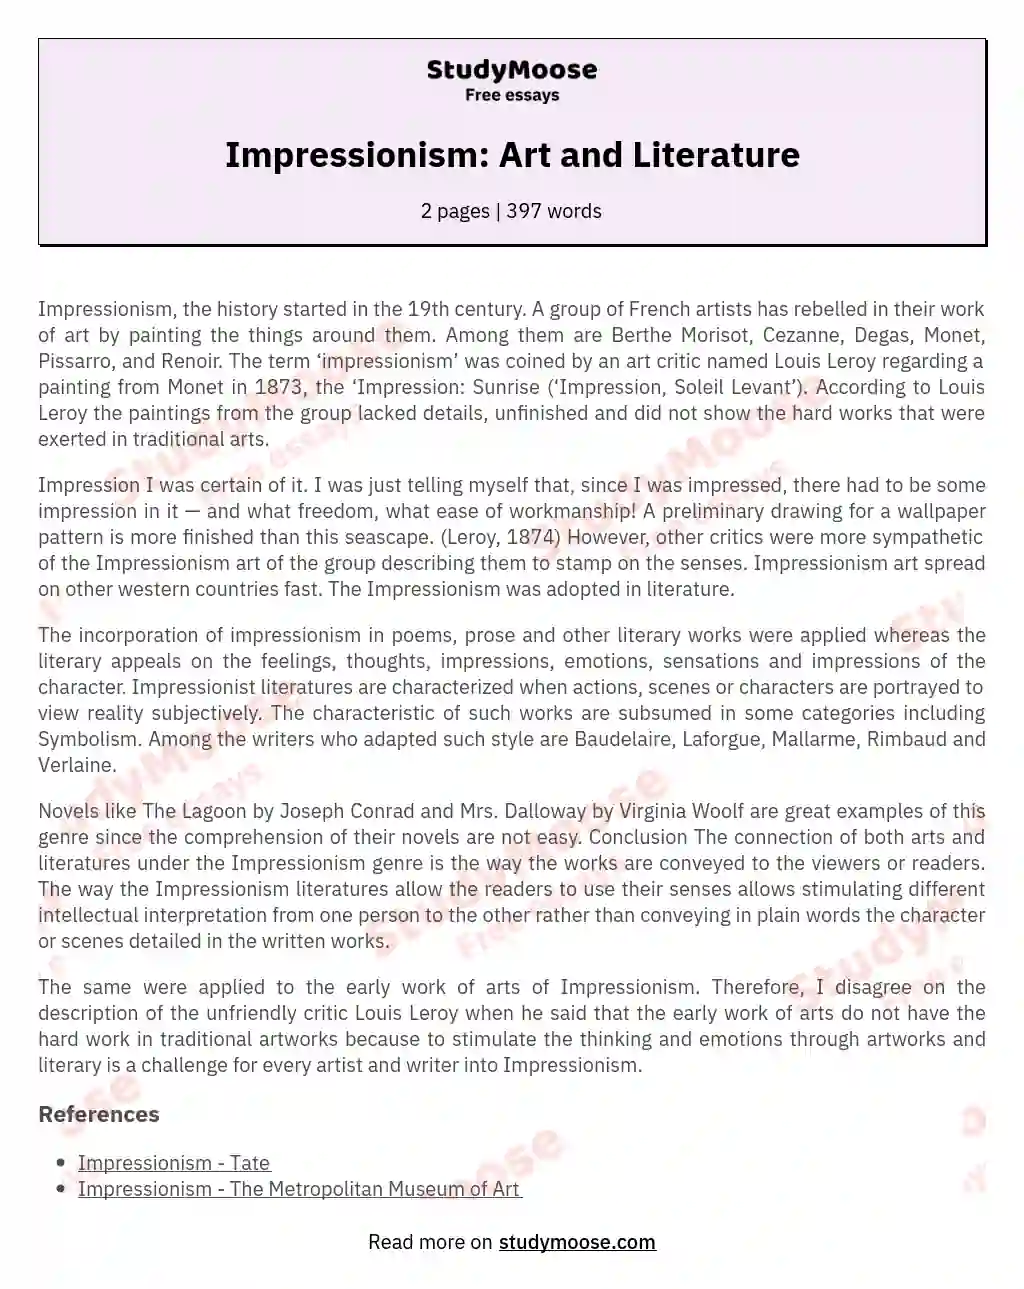 Impressionism: Art and Literature essay